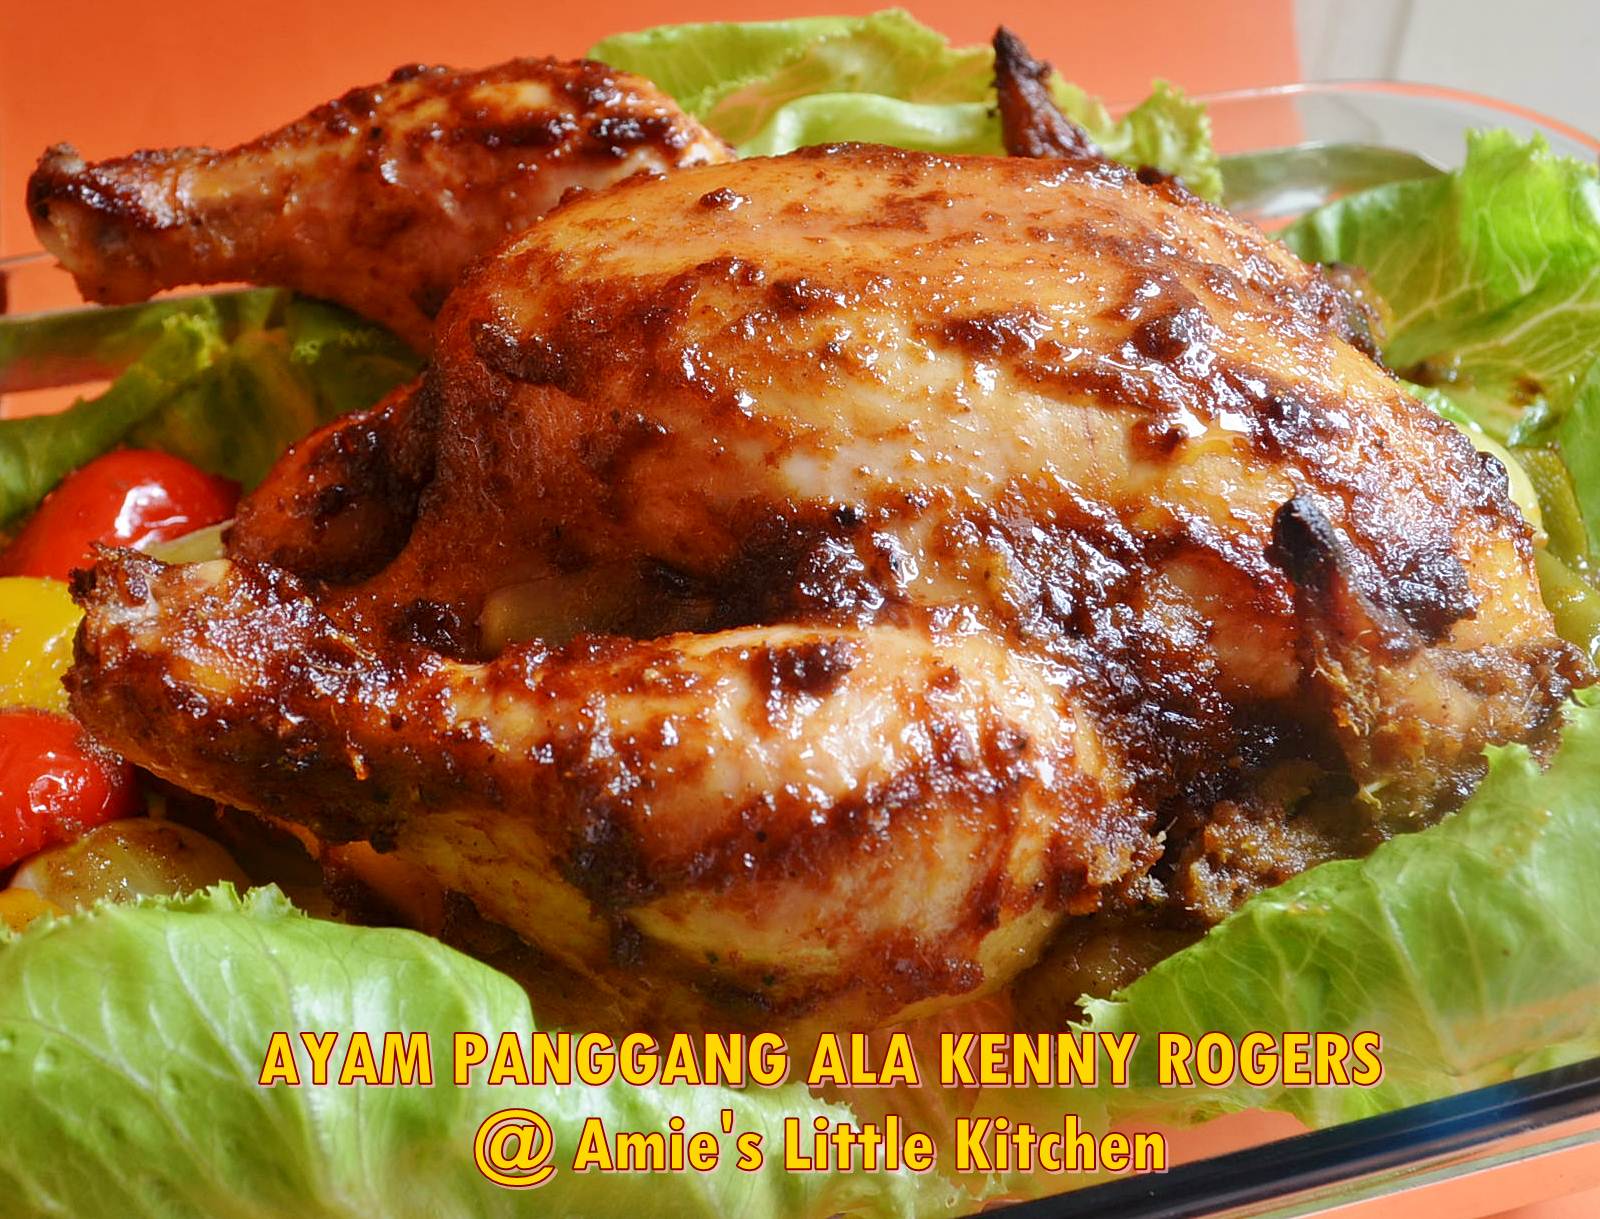 AMIE'S LITTLE KITCHEN: Ayam Panggang ala Kenny Rogers